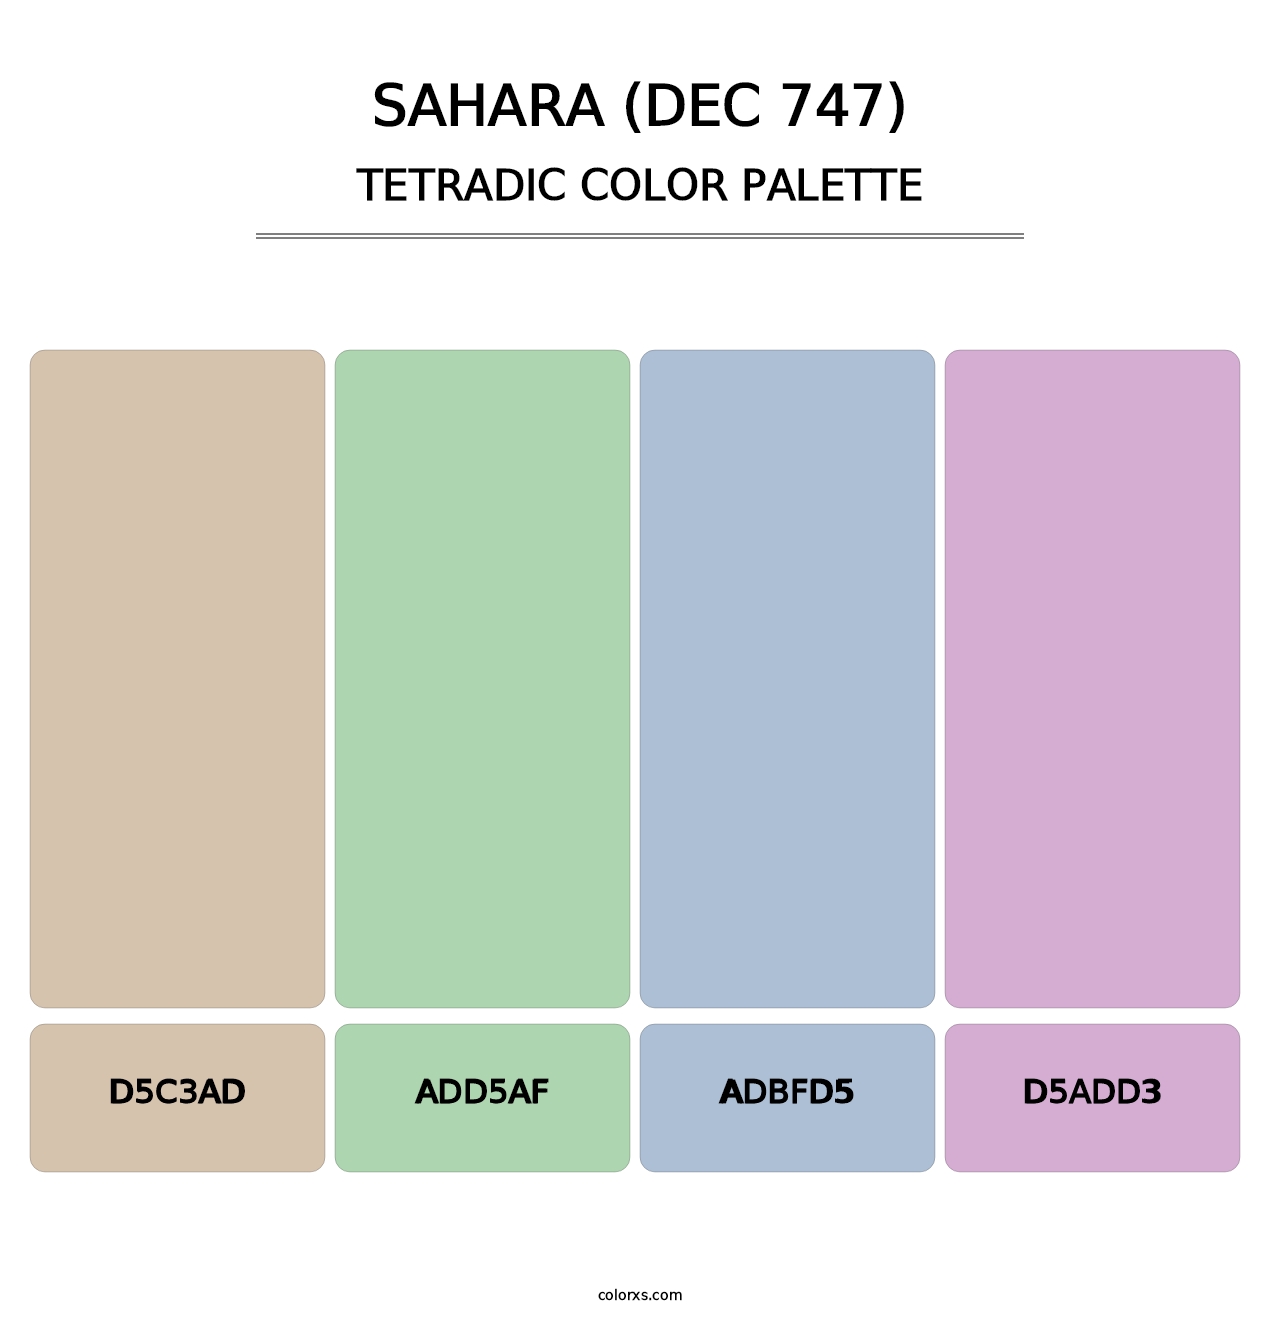 Sahara (DEC 747) - Tetradic Color Palette